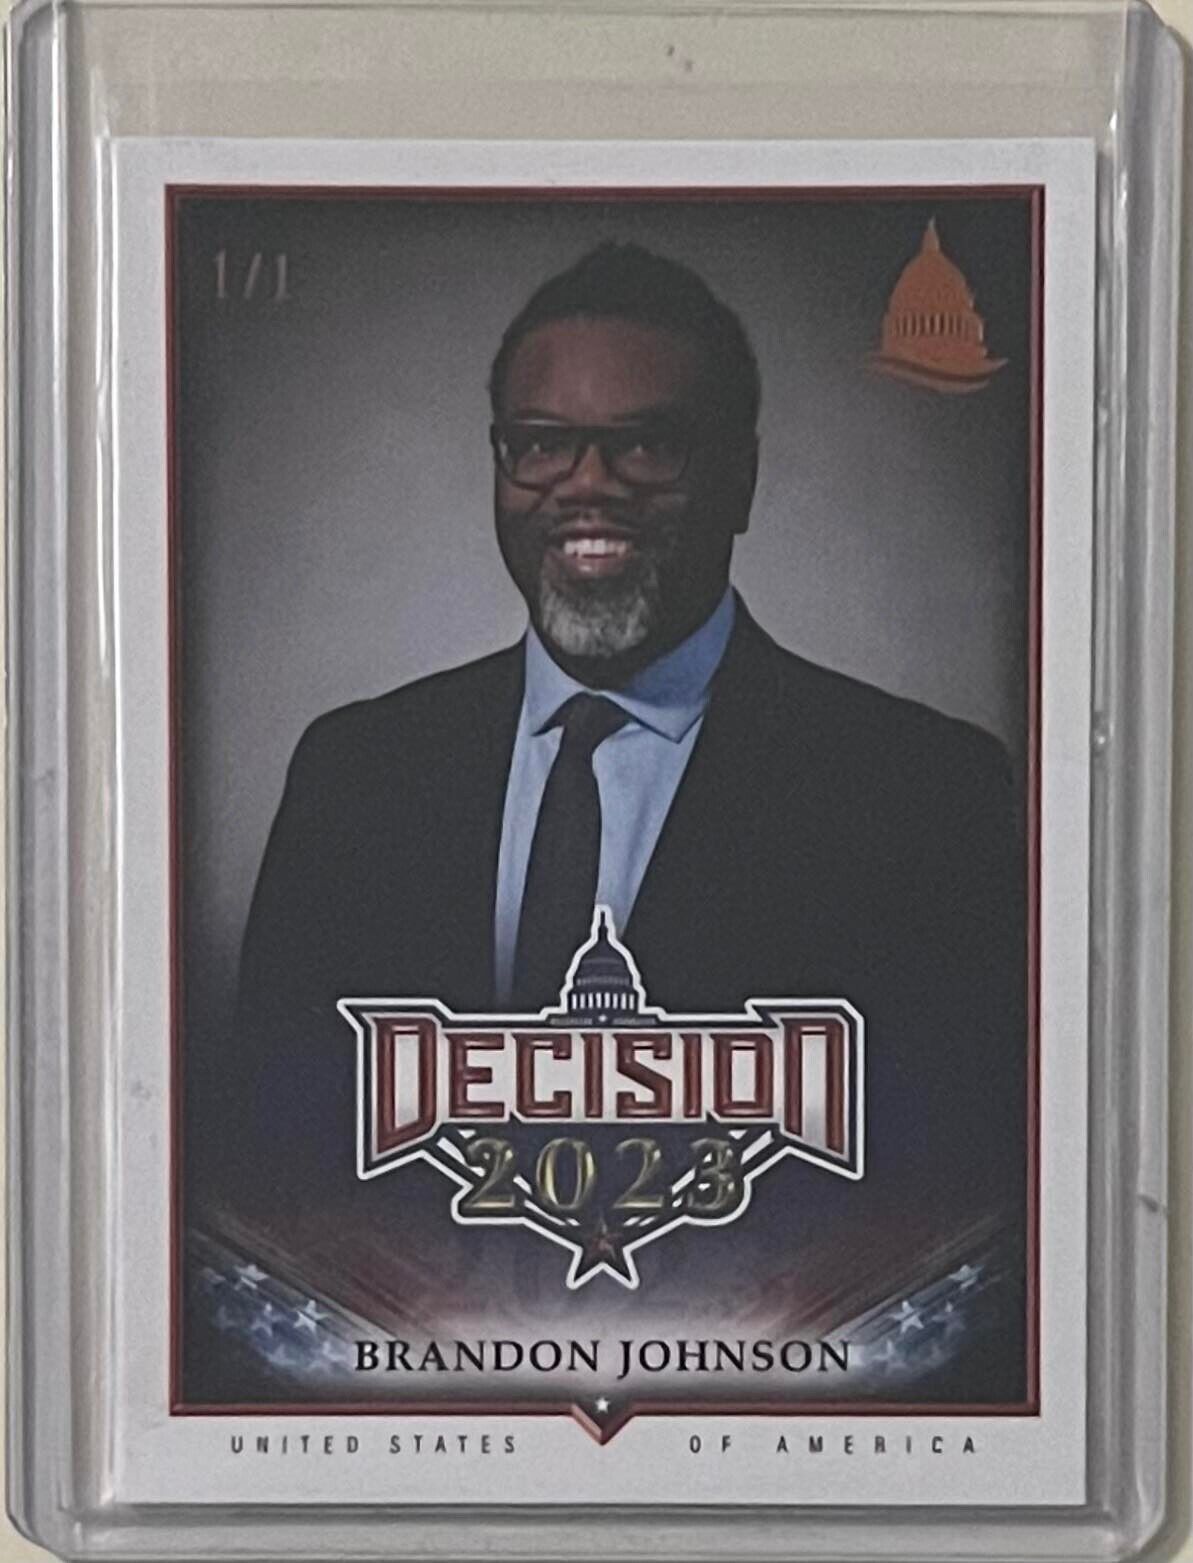 1 OF 1 BRANDON JOHNSON #/D 1/1 2023 DECISION COPPER FOIL SP CARD CHICAGO MAYOR